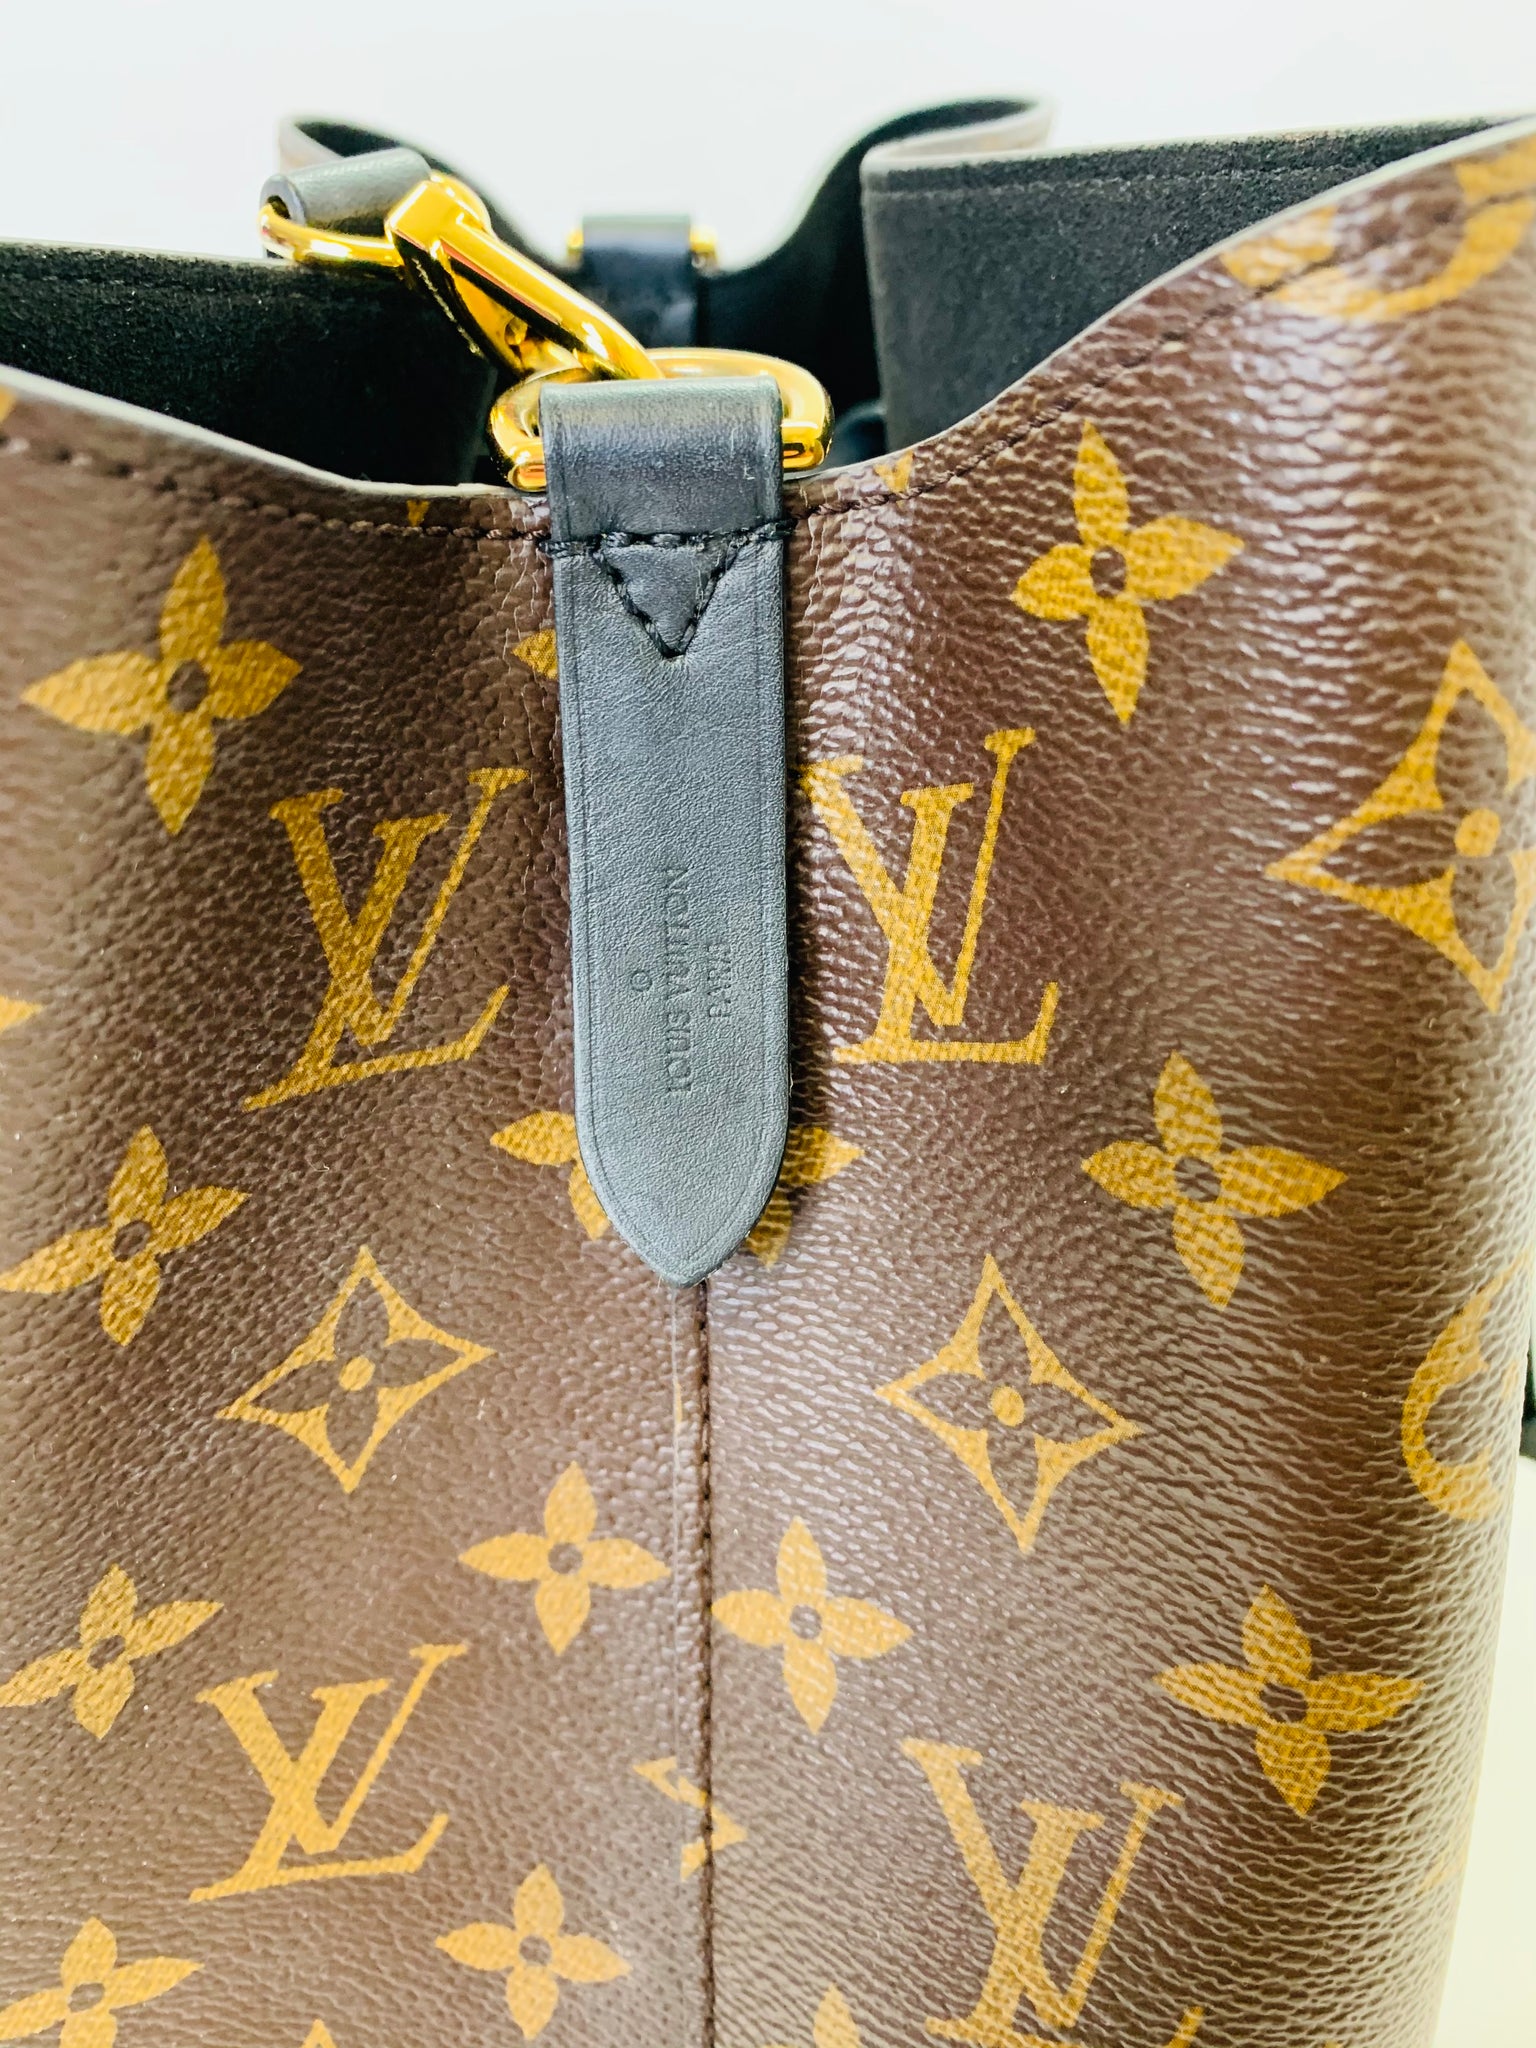 Louis Vuitton NeoNoe Bag in Epi Leather  Louis vuitton bag neverfull,  Bags, Louis vuitton cosmetic bag